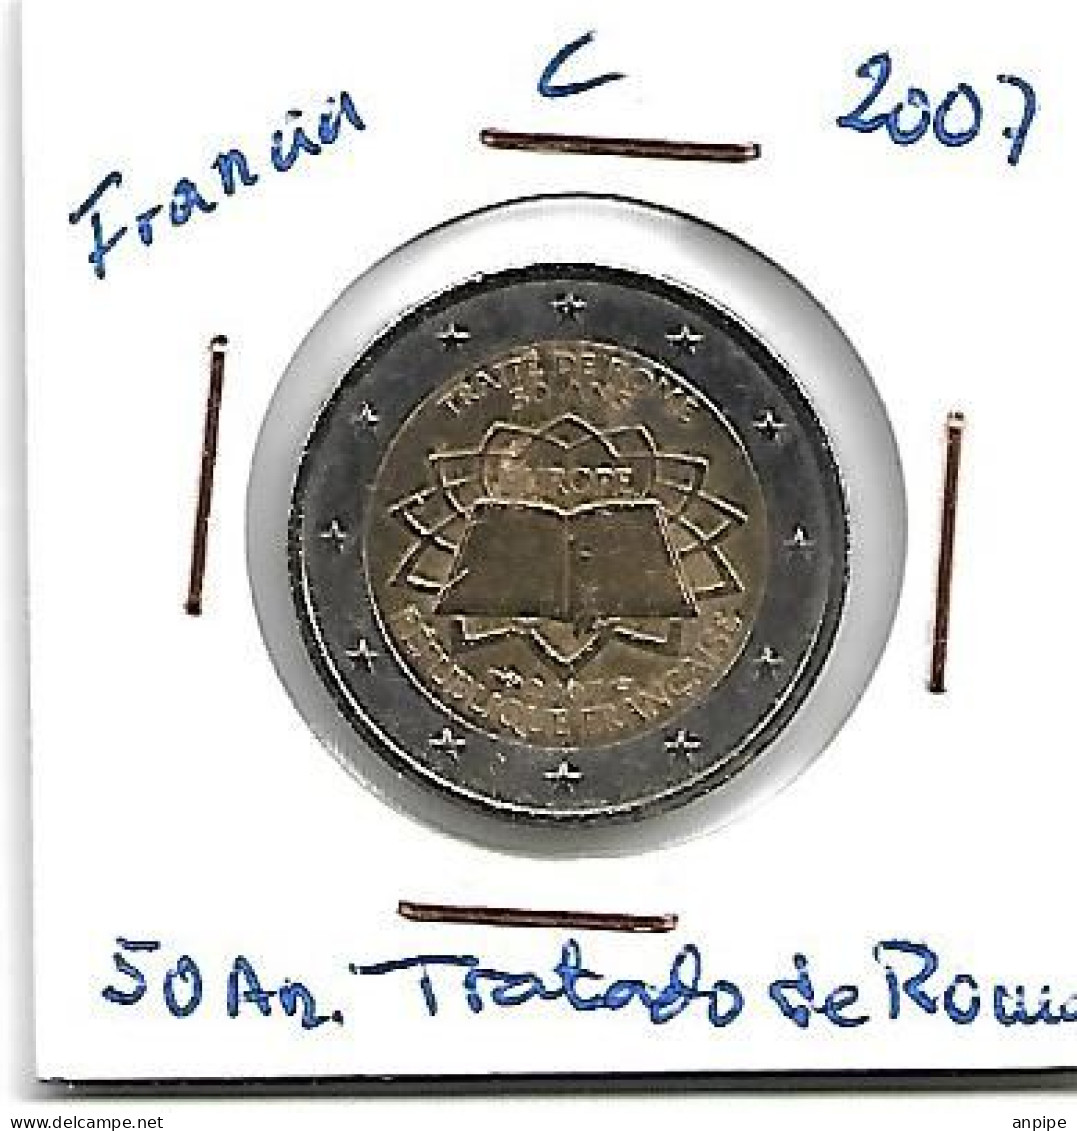 FRANCIA 2 €. CONMEMORATIVO - Frankreich